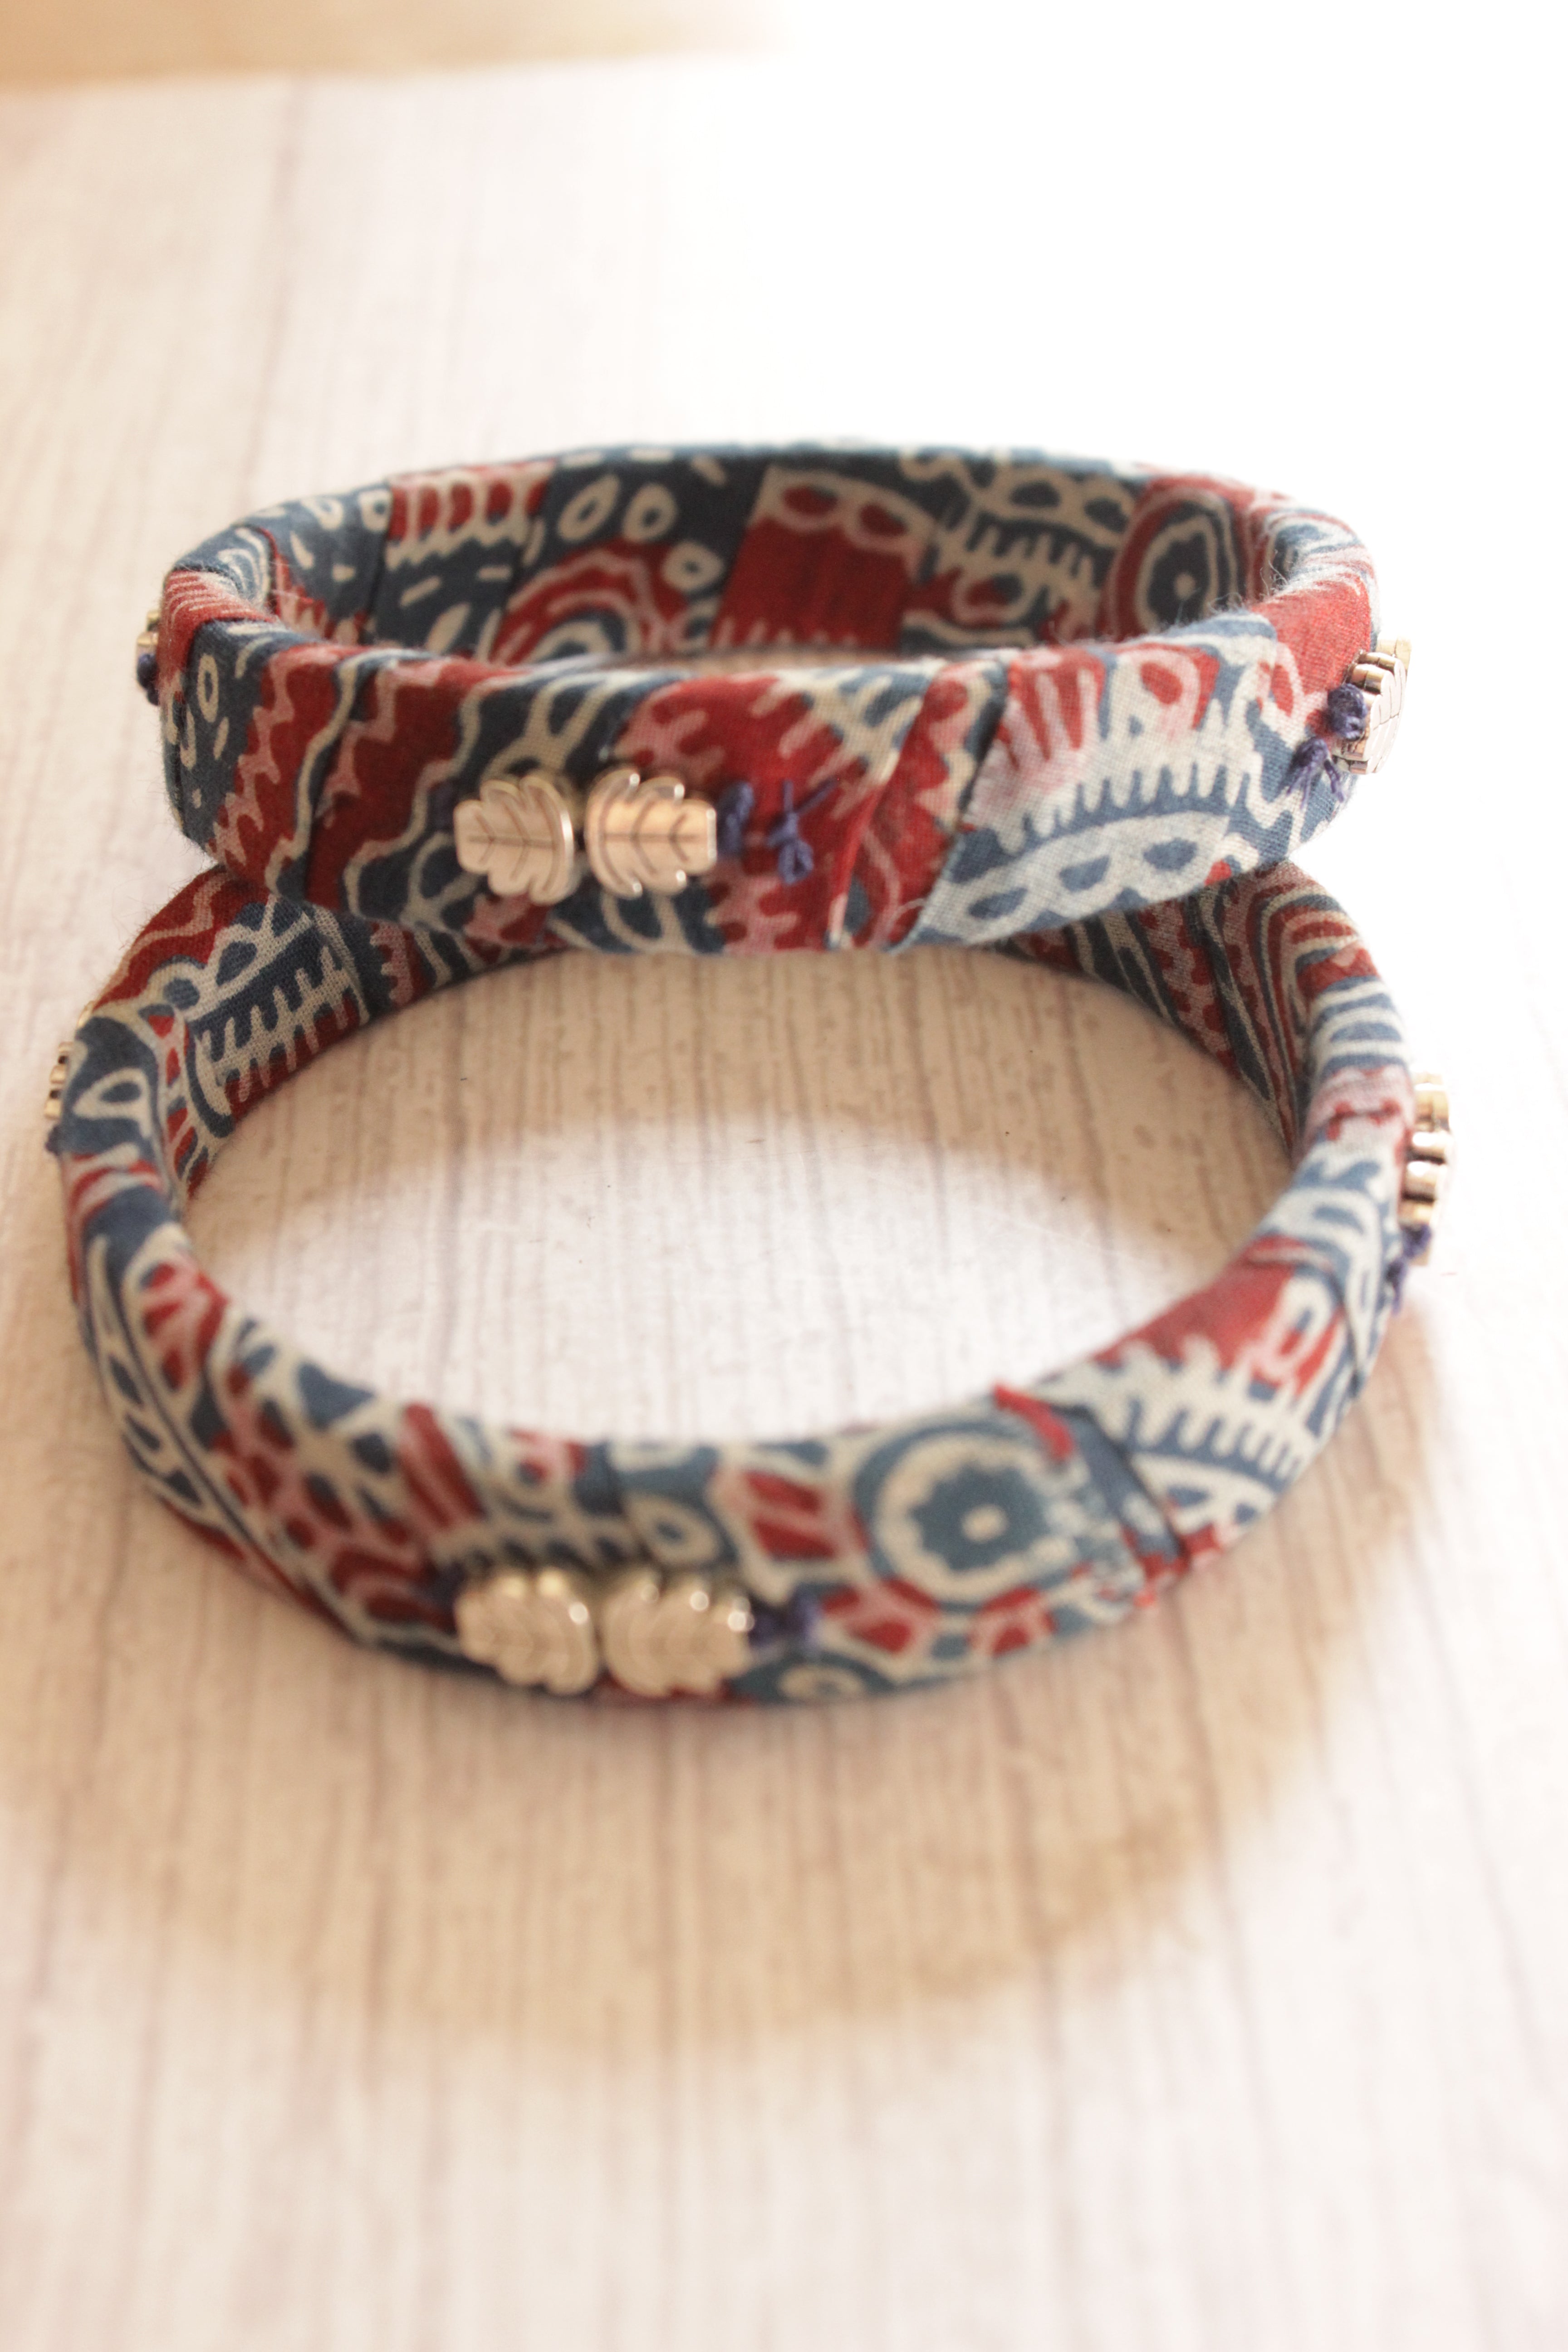 Handmade bracelets by 